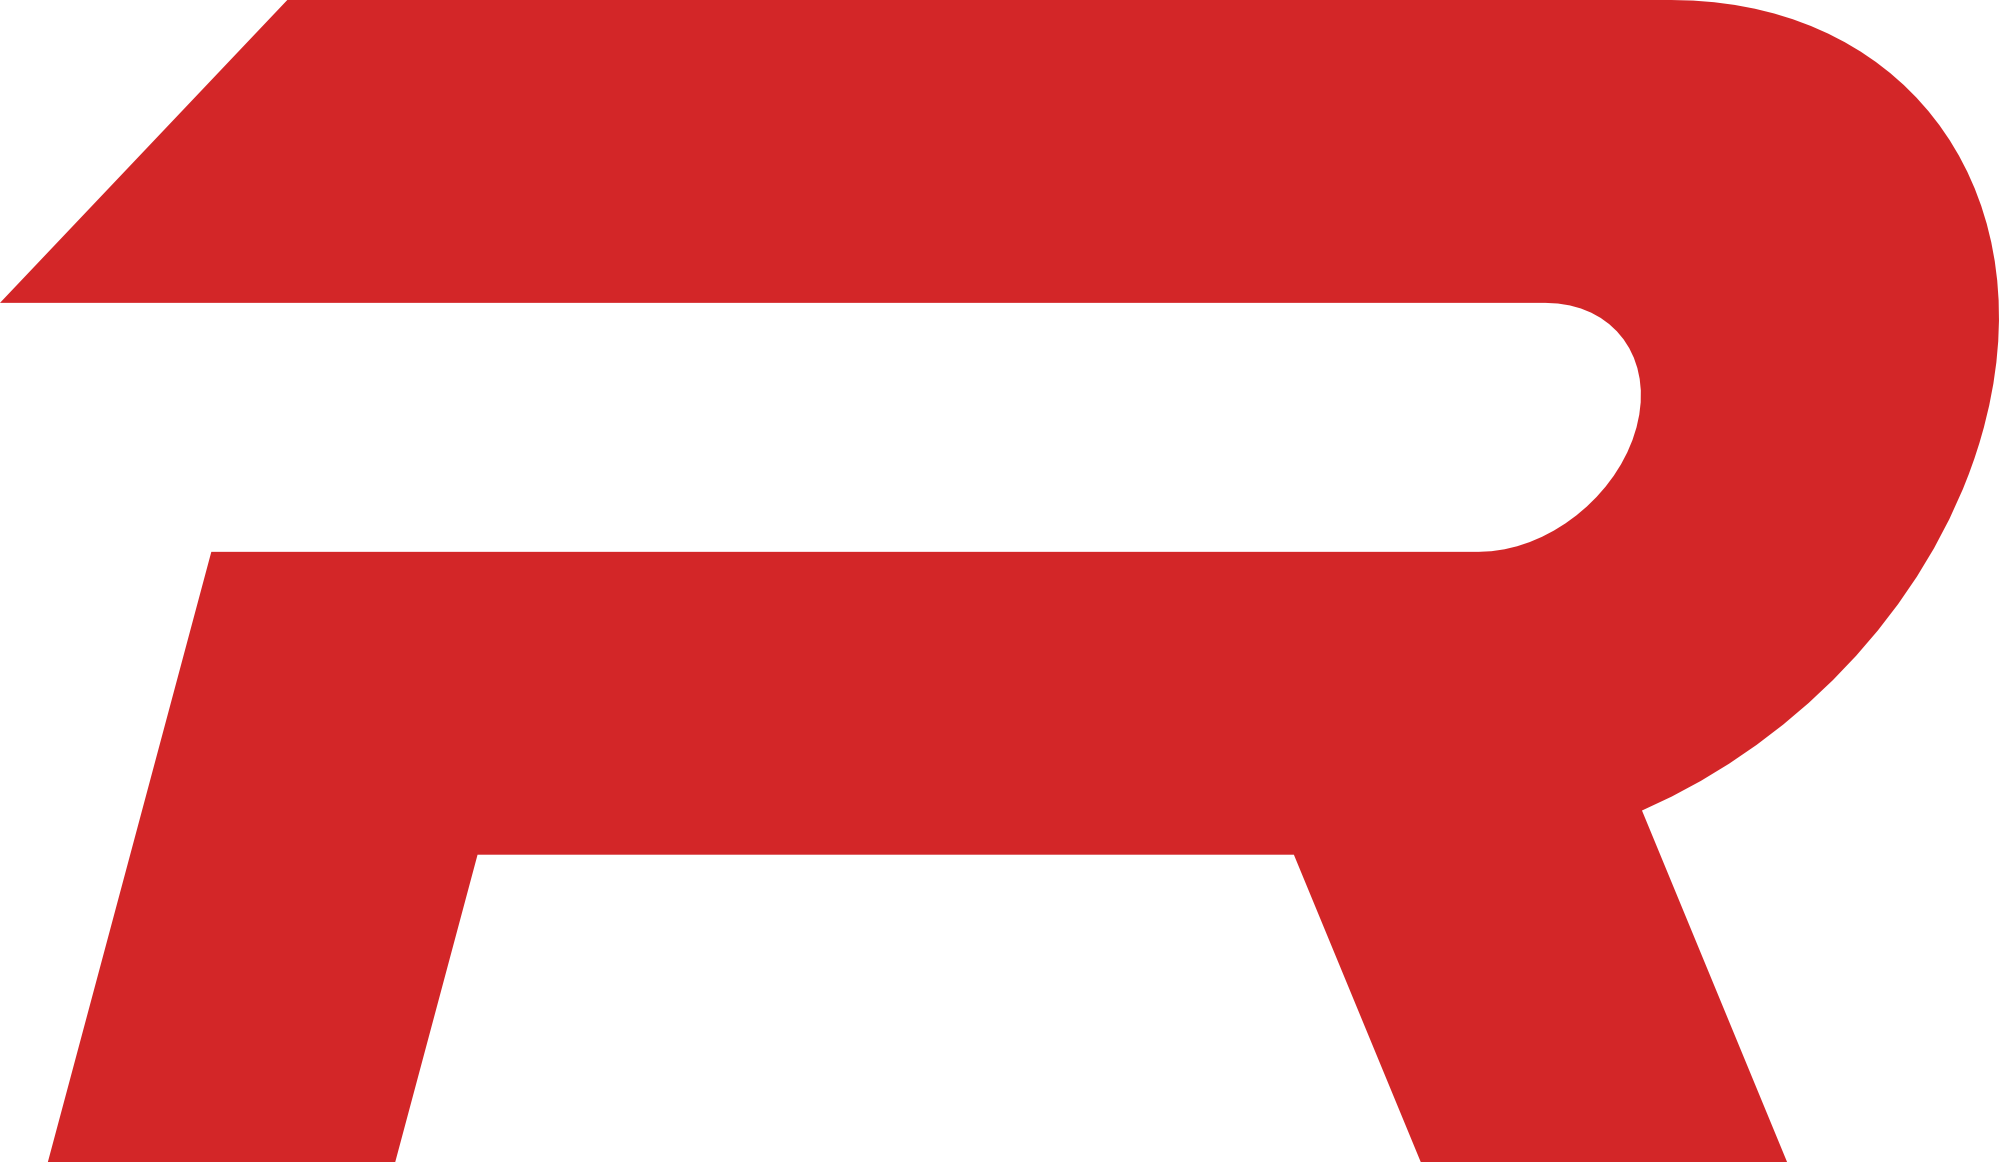 Radne logo for download in vector format